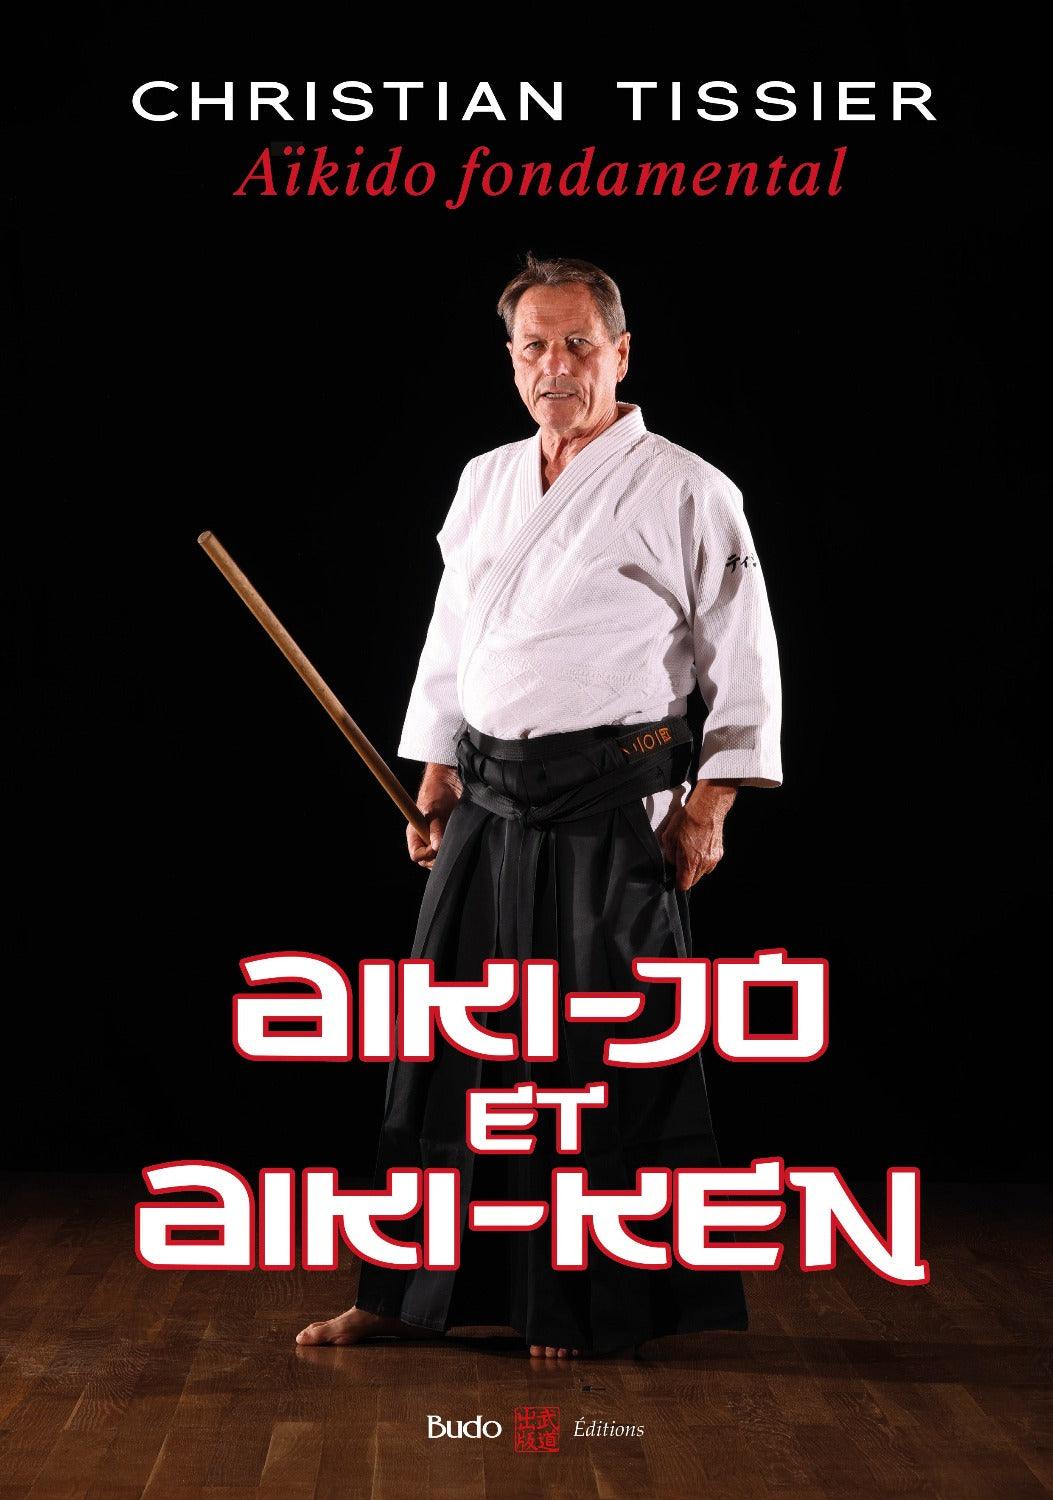 Aïkido fondamental : Aiki-Jo et Aiki-Ken - Budo Editions - Boutique des Arts Martiaux